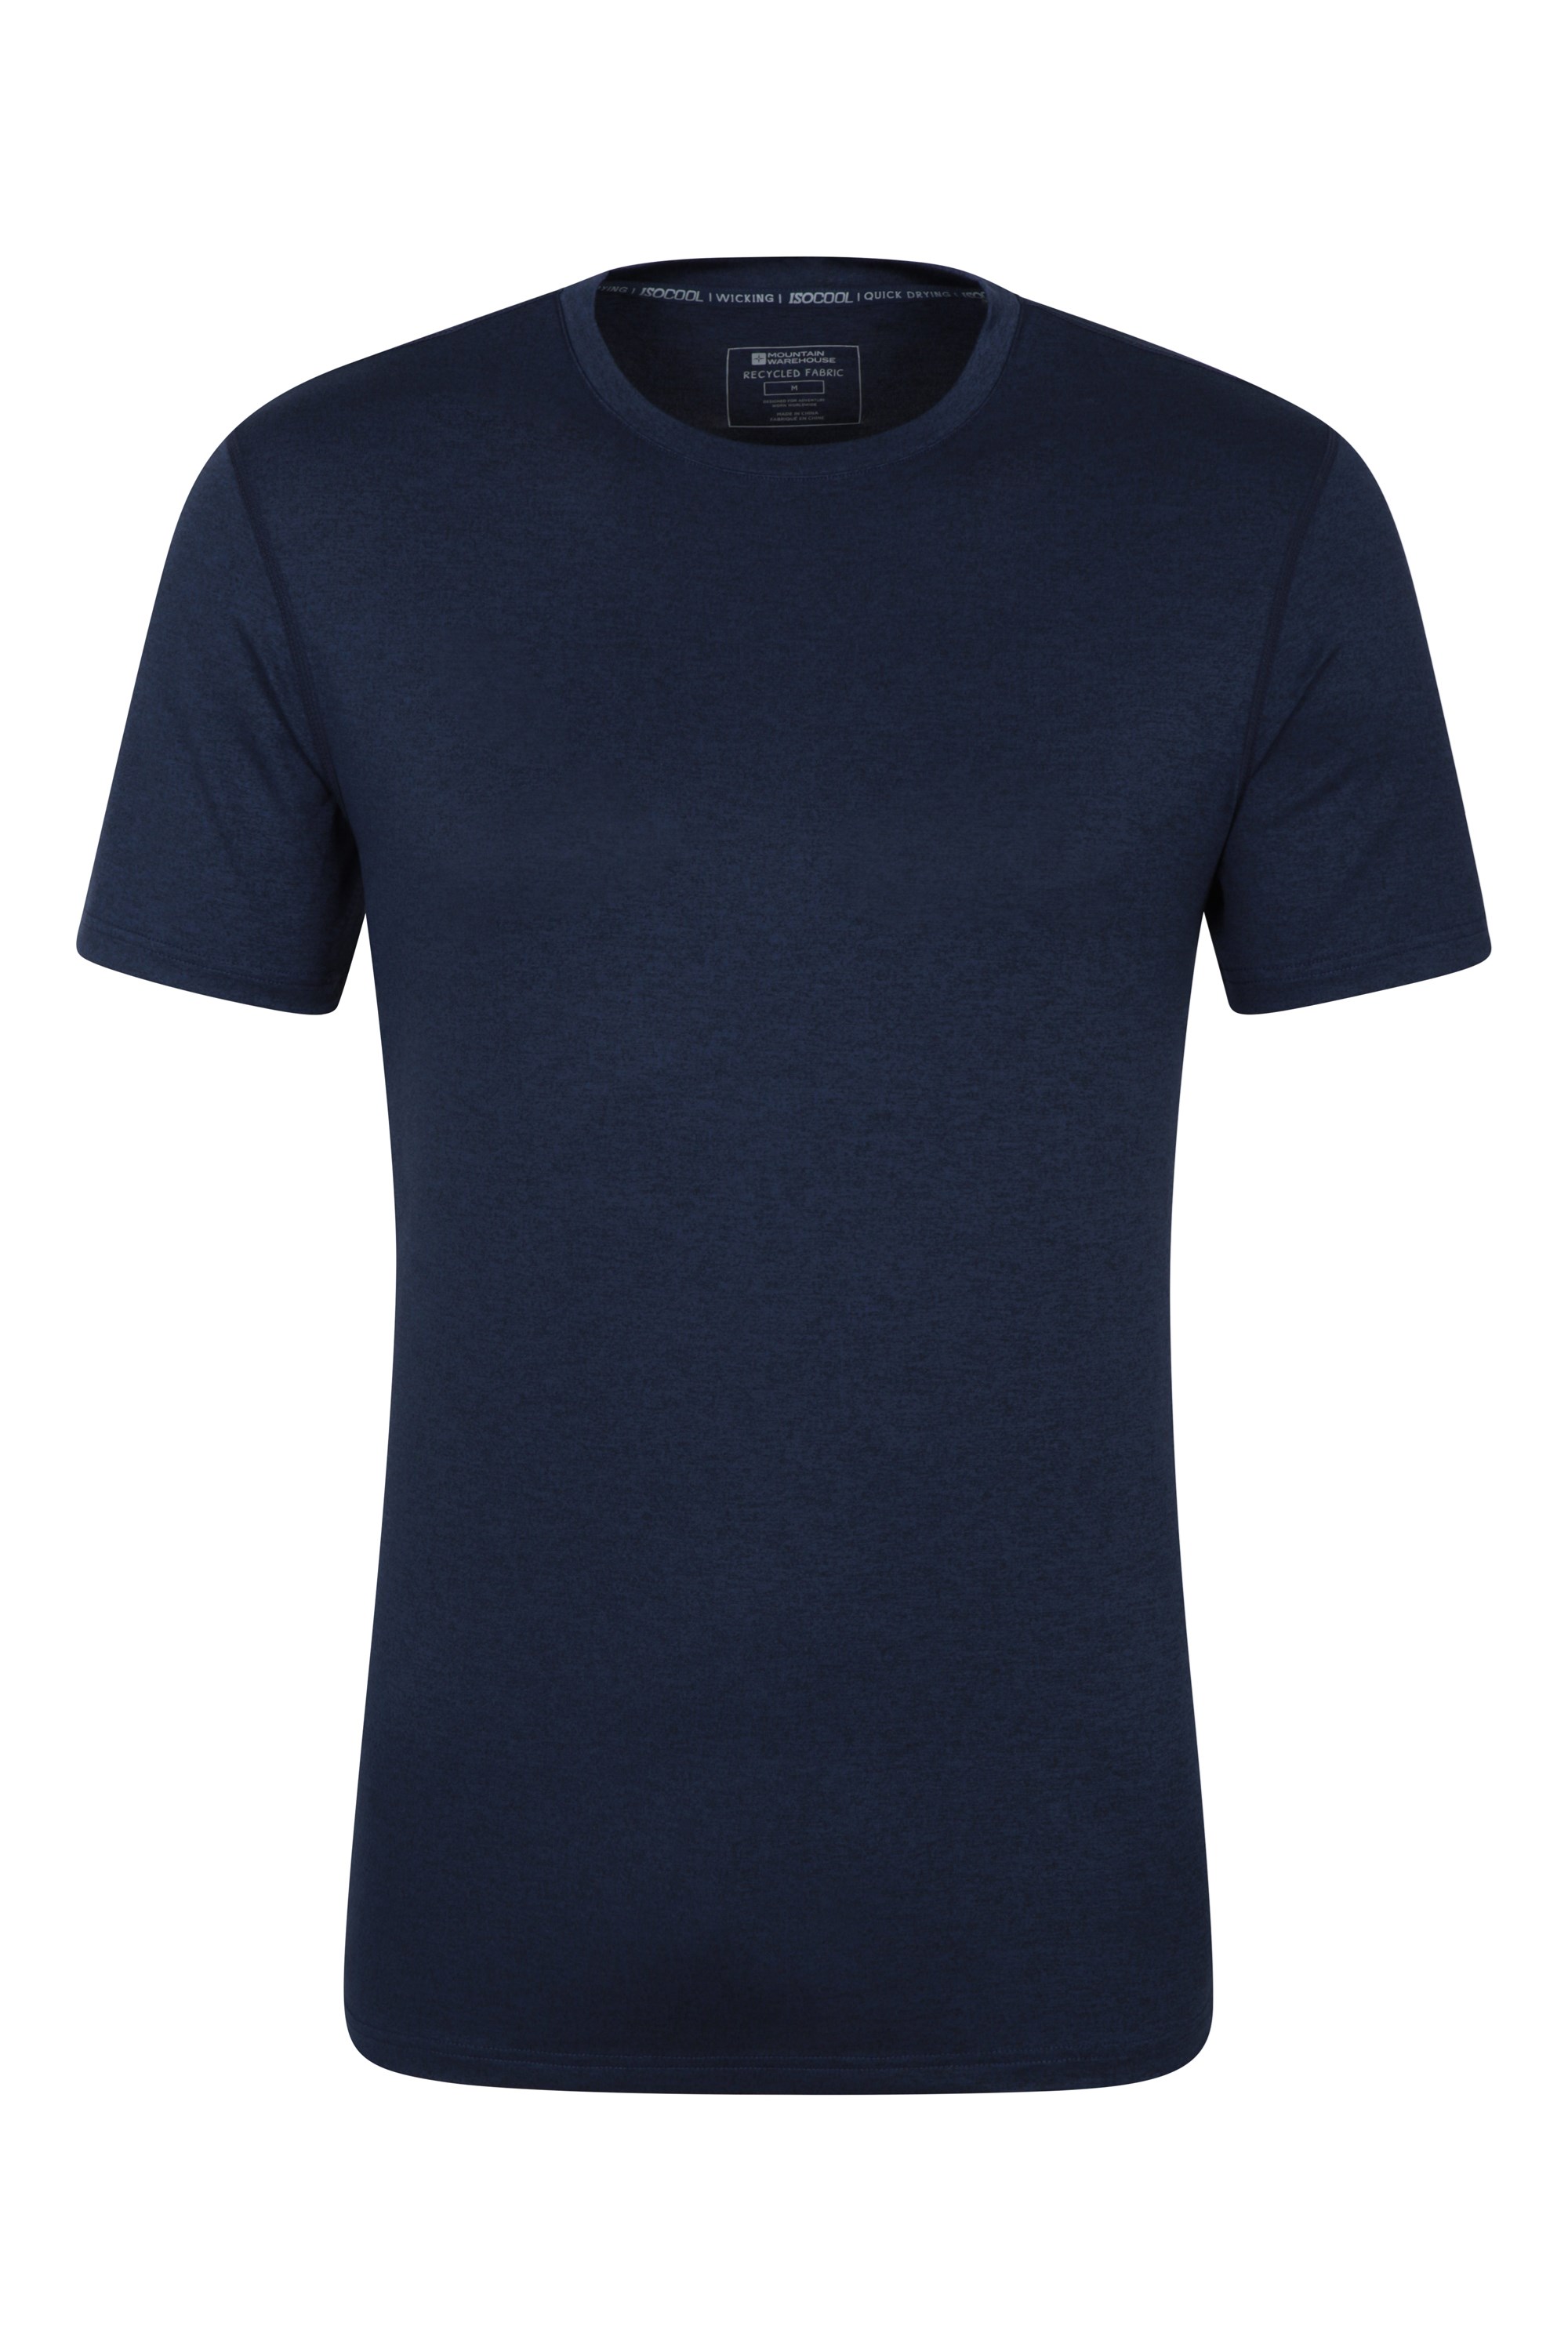 Tee-shirt Echo Melange recyclé homme - Bleu Marine